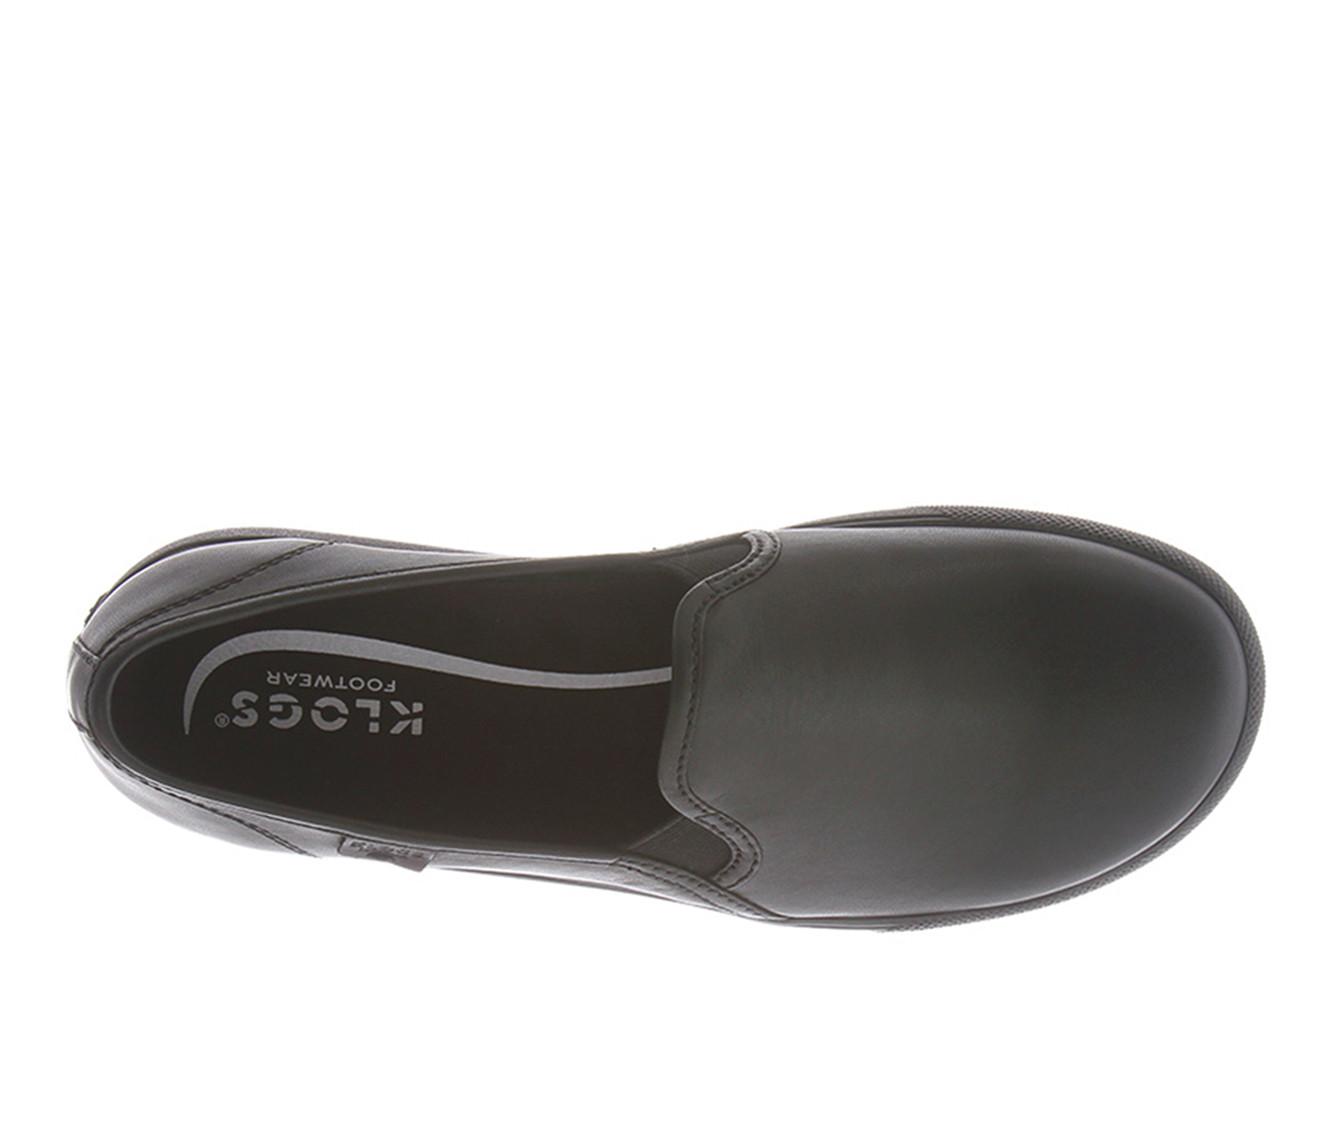 Women's KLOGS Footwear Padma Slip Resistant Shoes